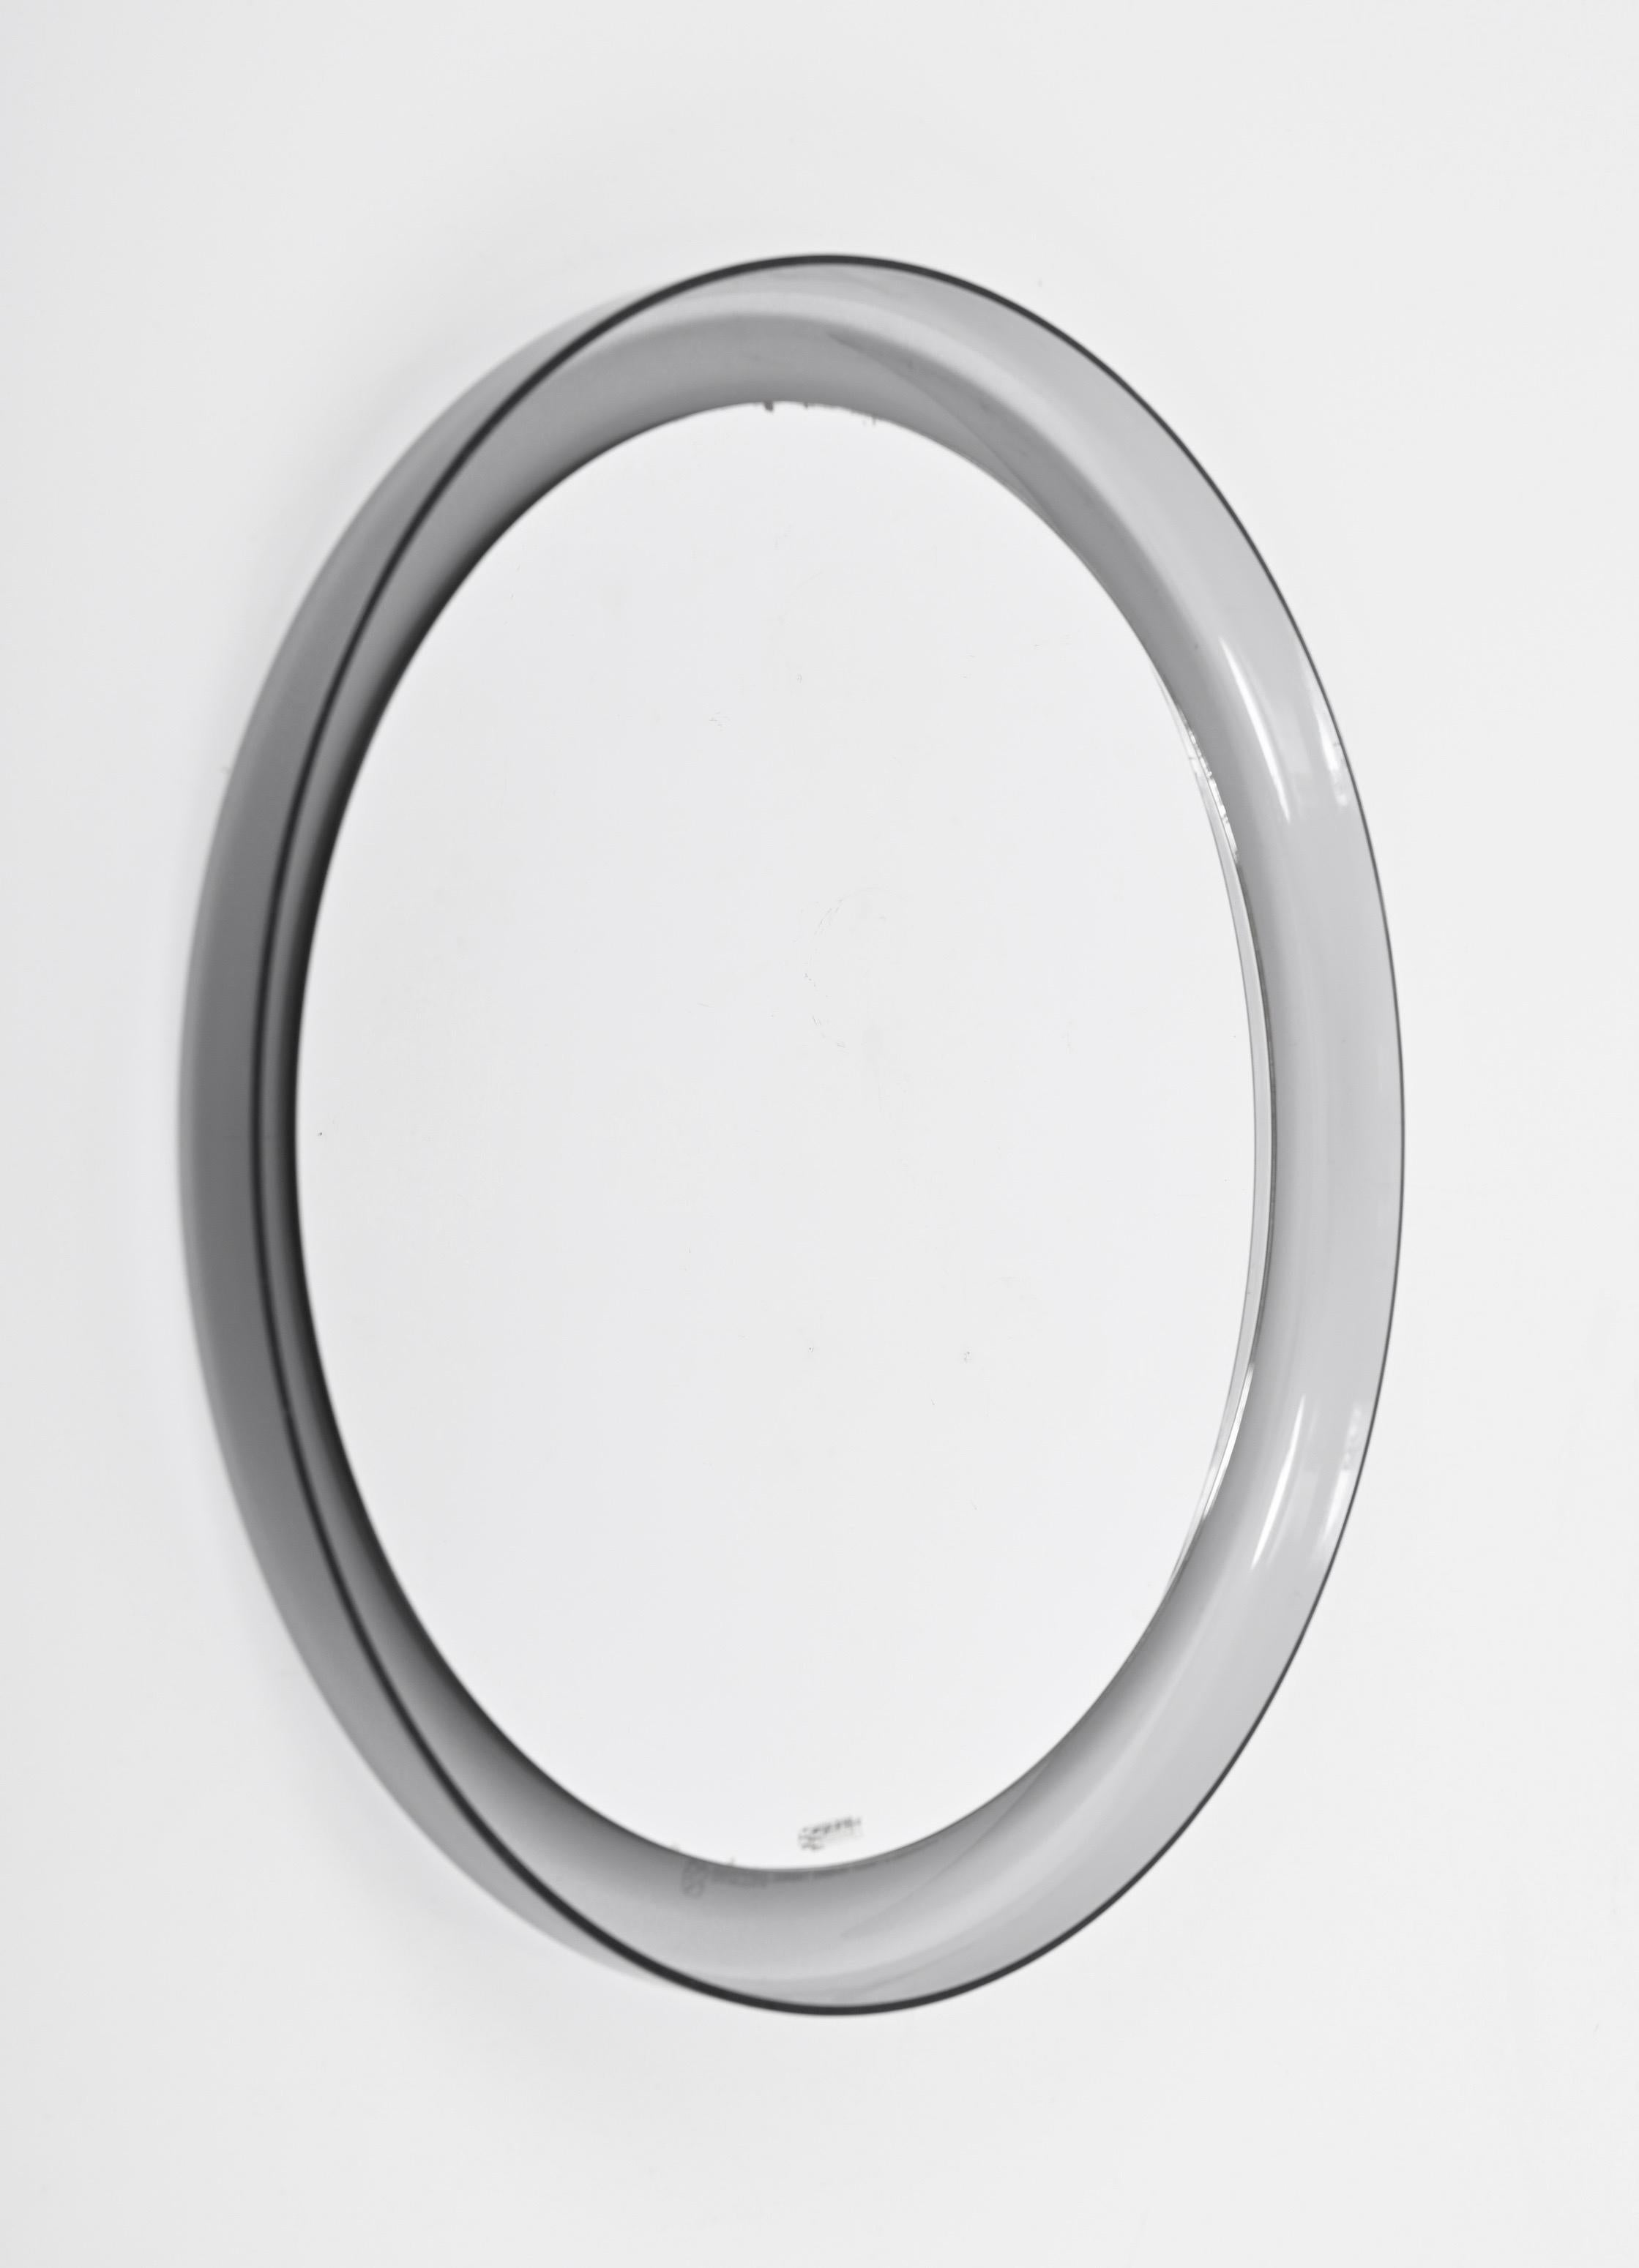 Luigi Massoni for Guzzini Clear Lucite Round Wall Mirror, Italy, 1960s For Sale 5